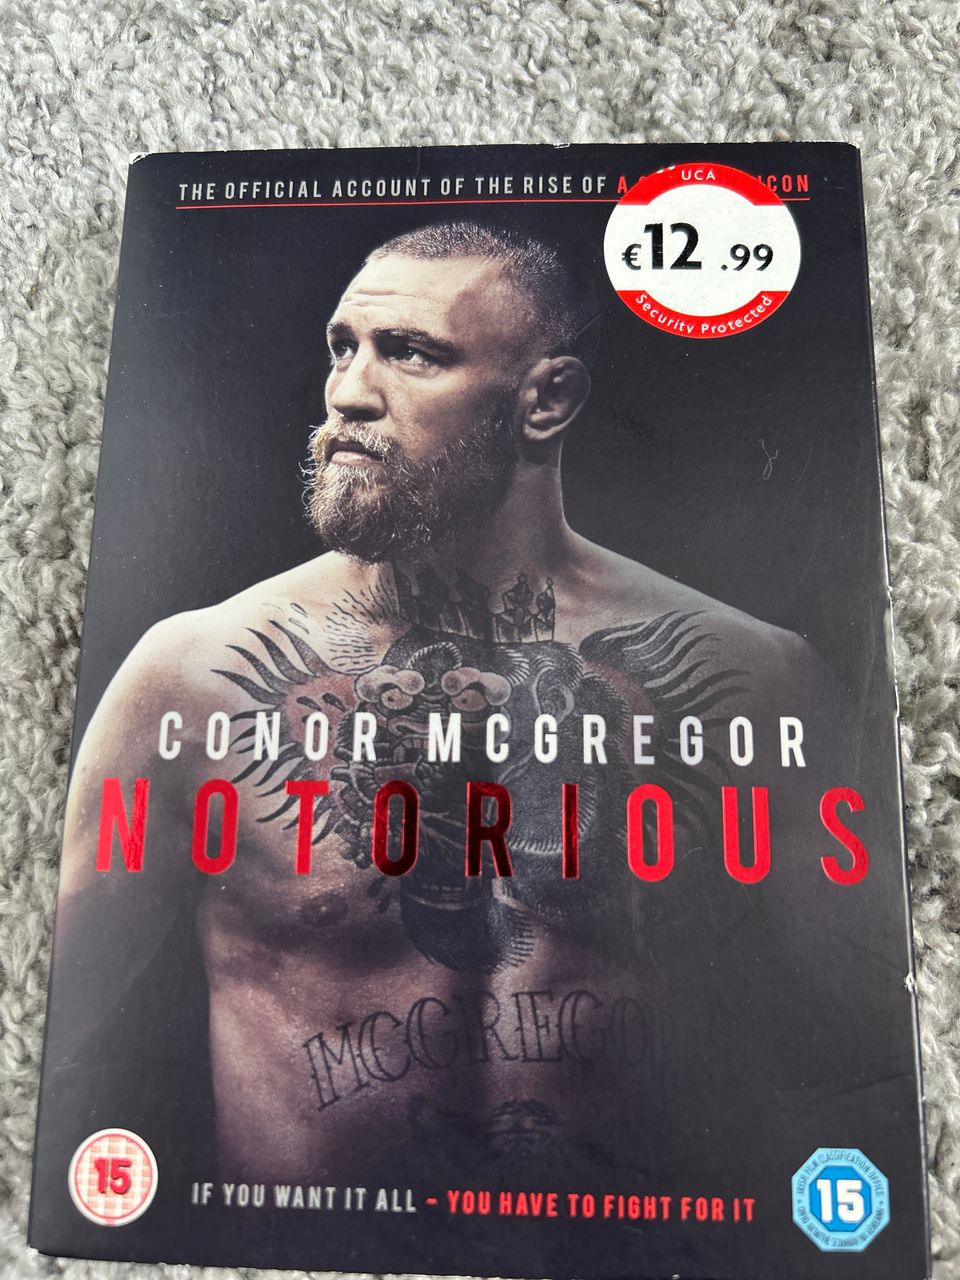 UFC Connor Mcgregor Notorious DVD